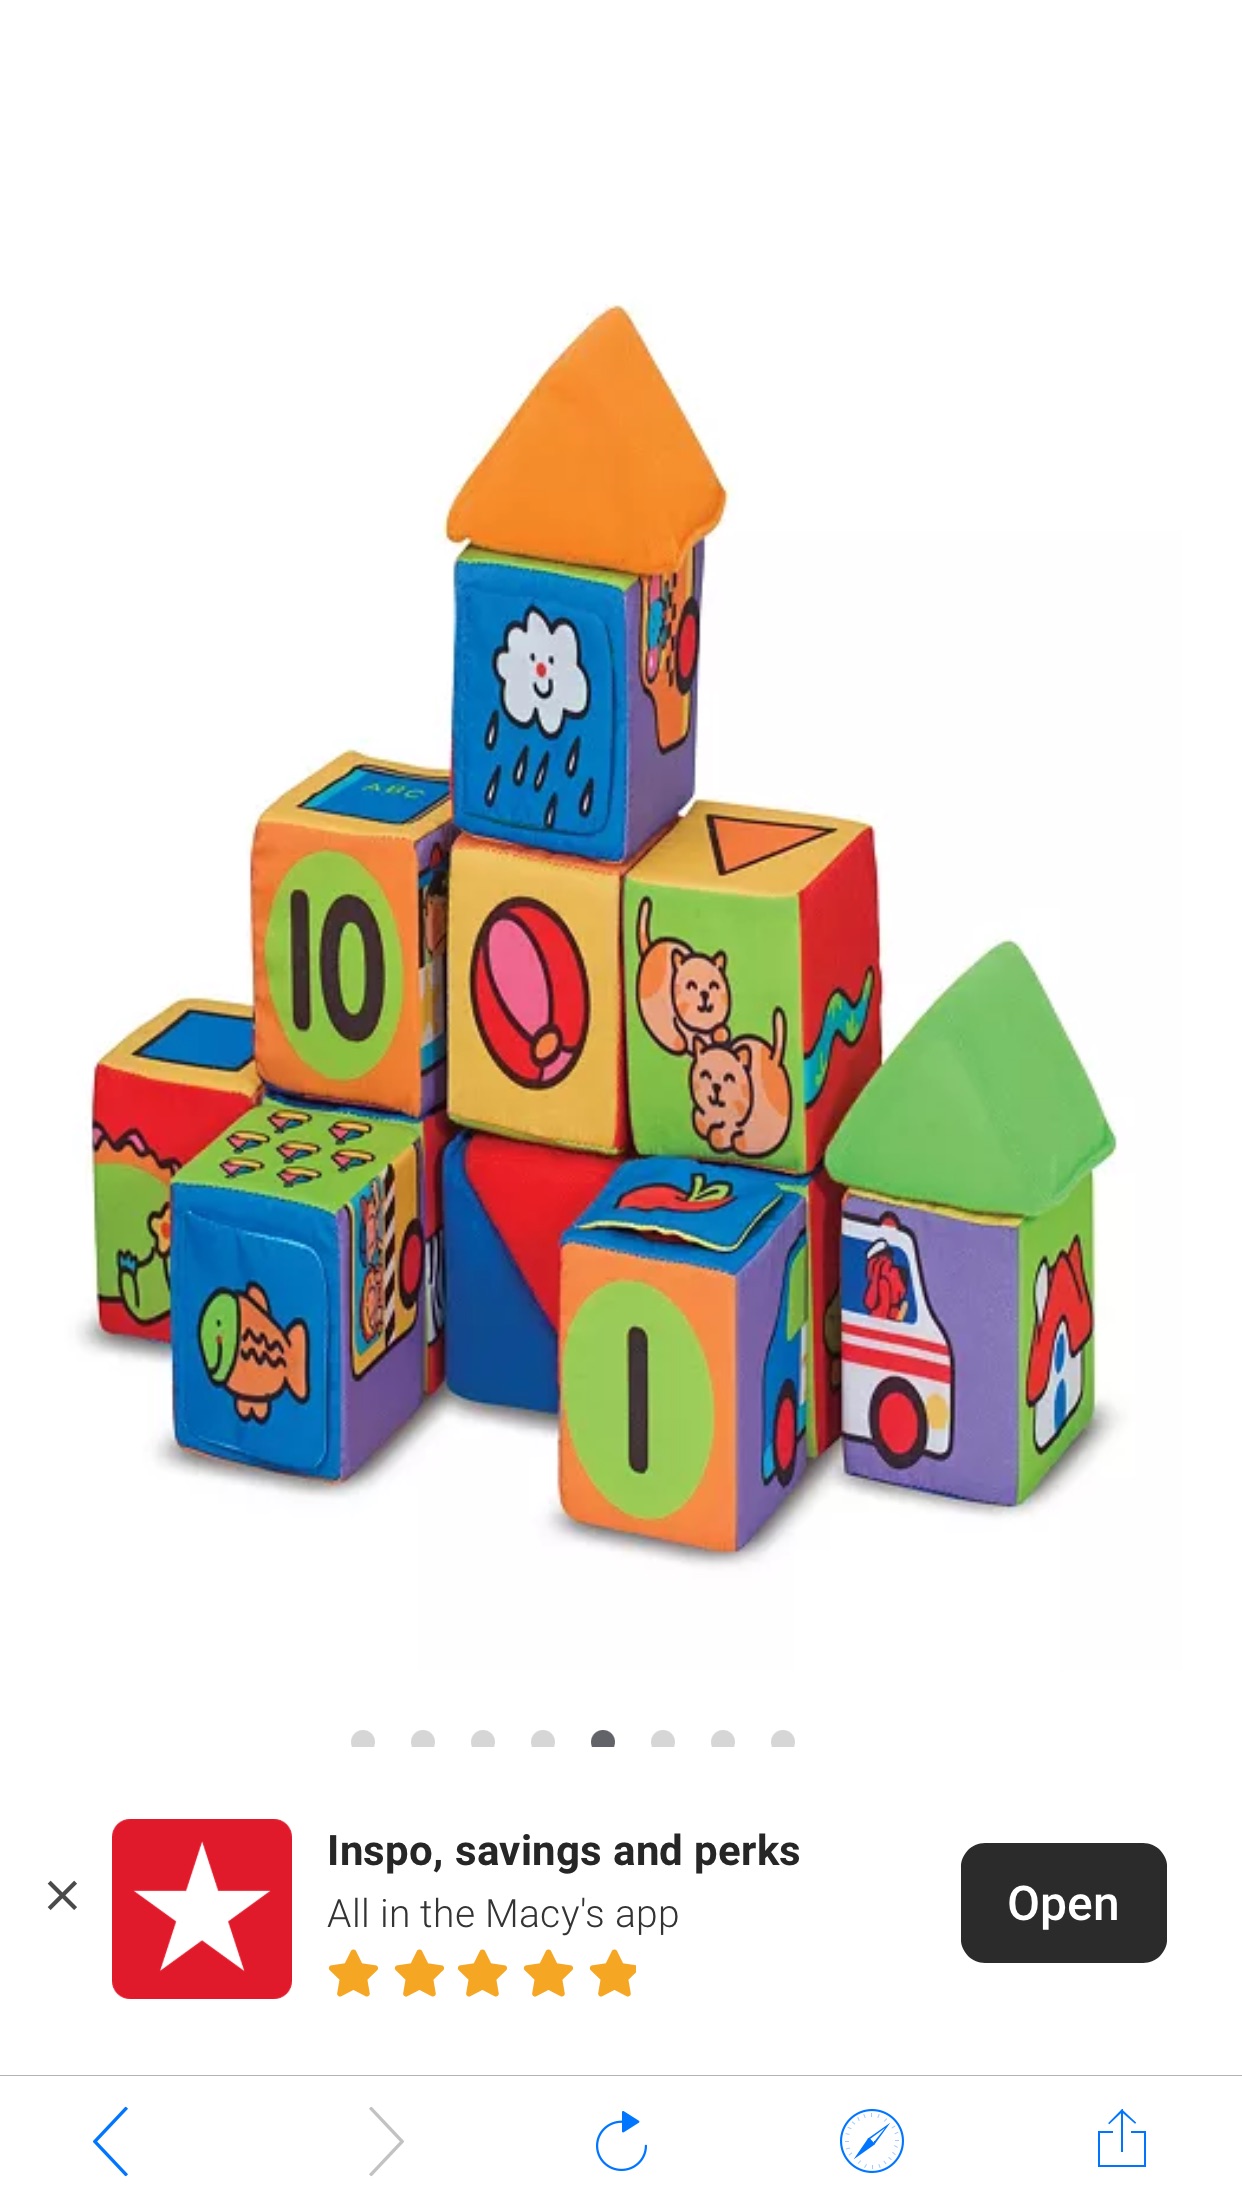 Melissa and Doug Kids' Match & Build Toy Blocks & Reviews - All Toys - Home - Macy's婴幼儿布制积木